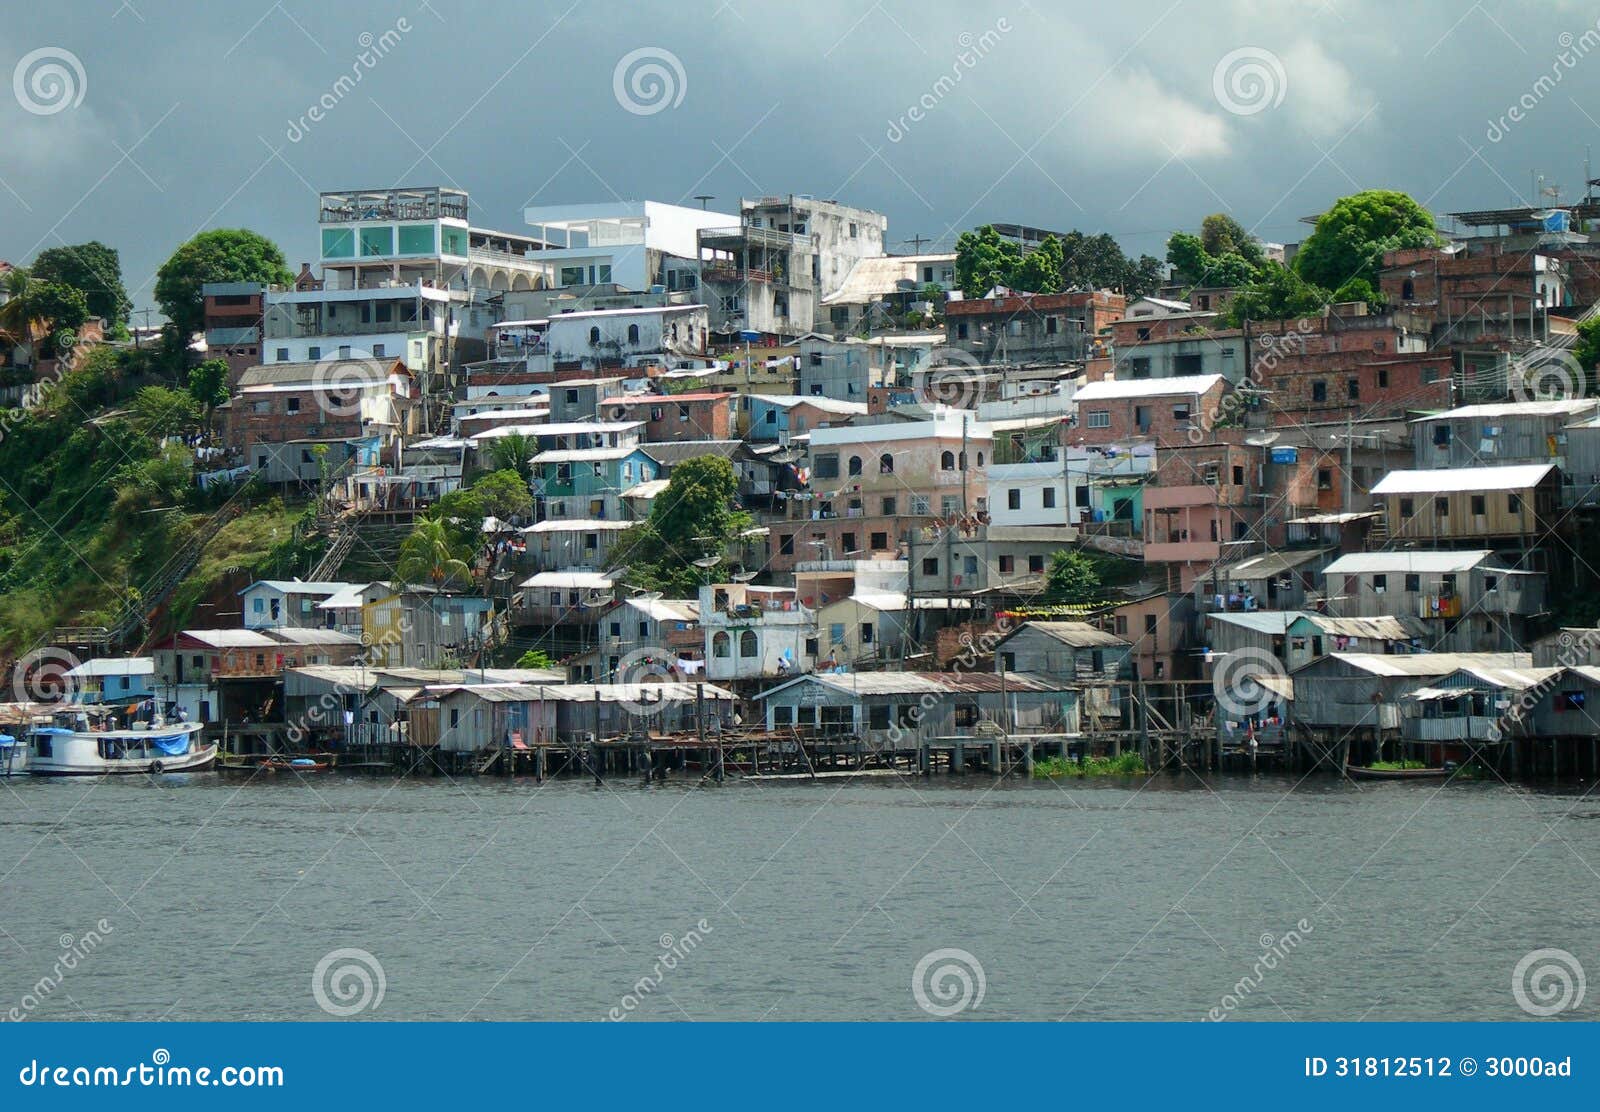 favela on the amazon in manaus